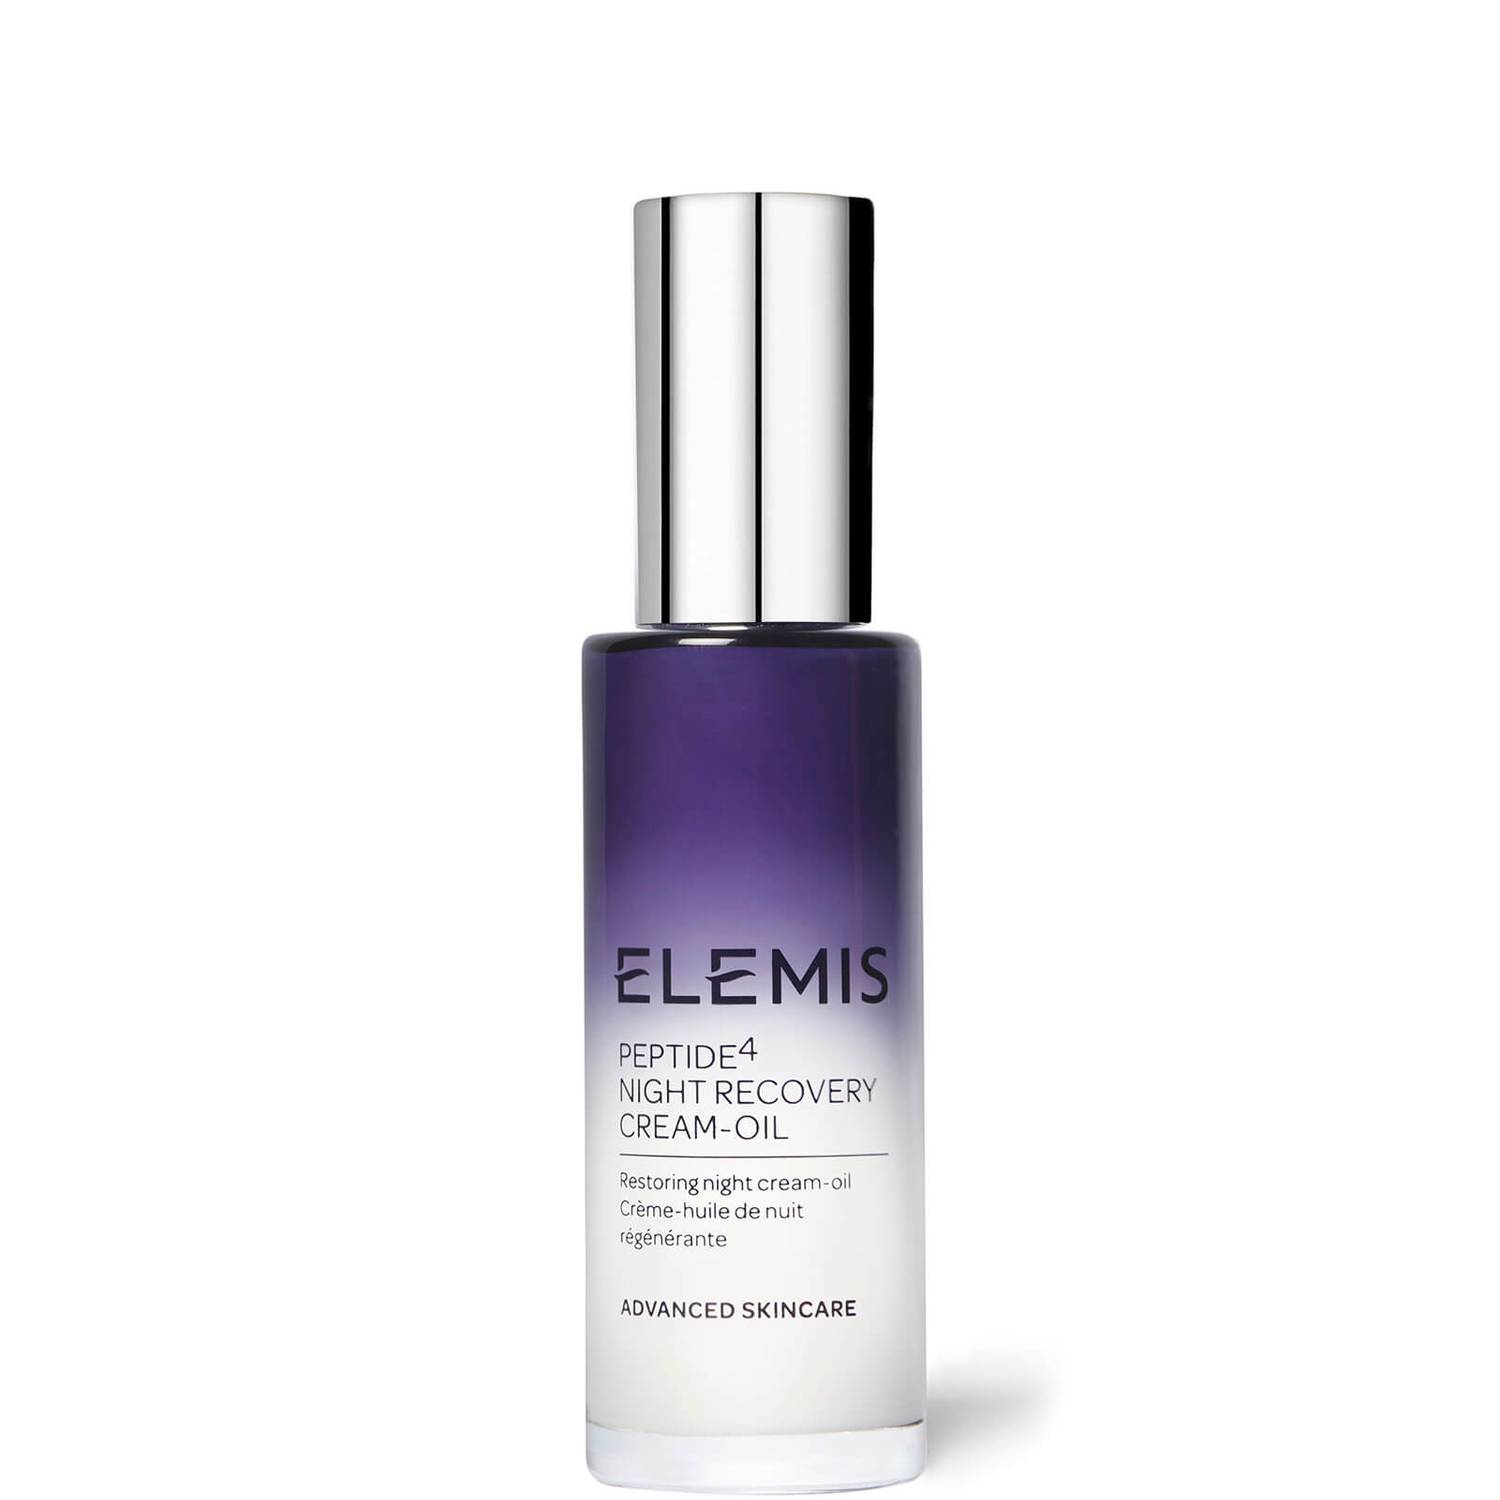 Elemis Peptide4 Night Recovery Cream - Oil 30 ml - интернет-магазин профессиональной косметики Spadream, изображение 36672